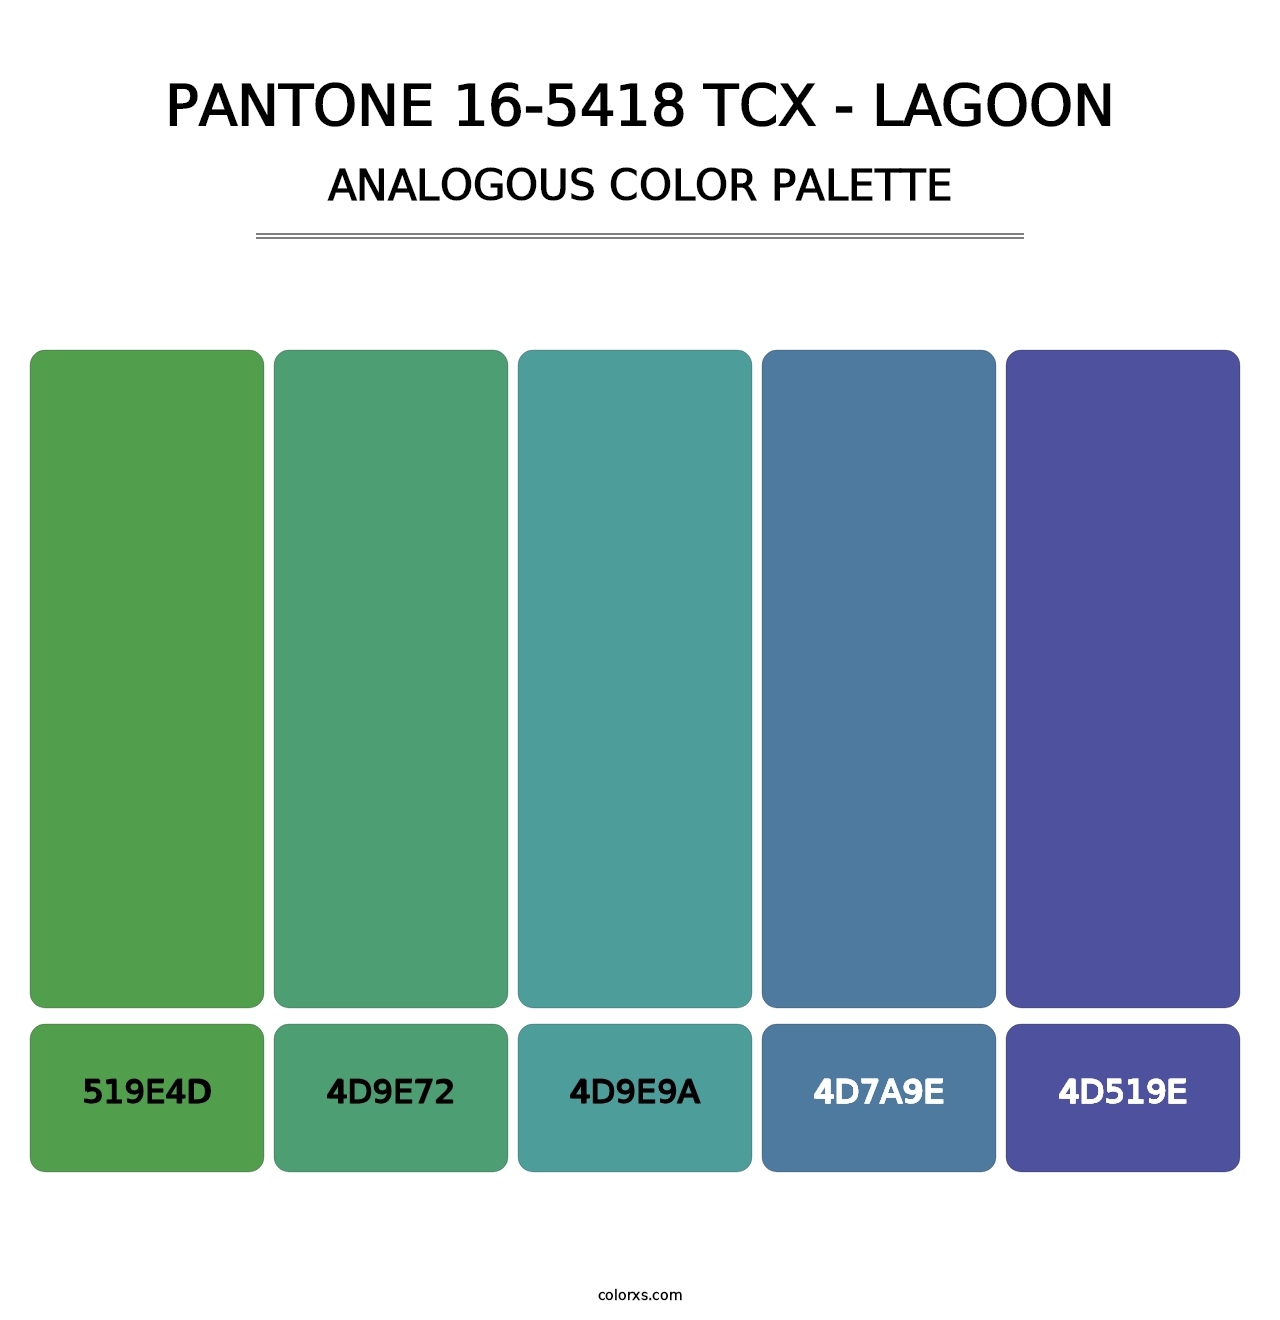 PANTONE 16-5418 TCX - Lagoon - Analogous Color Palette